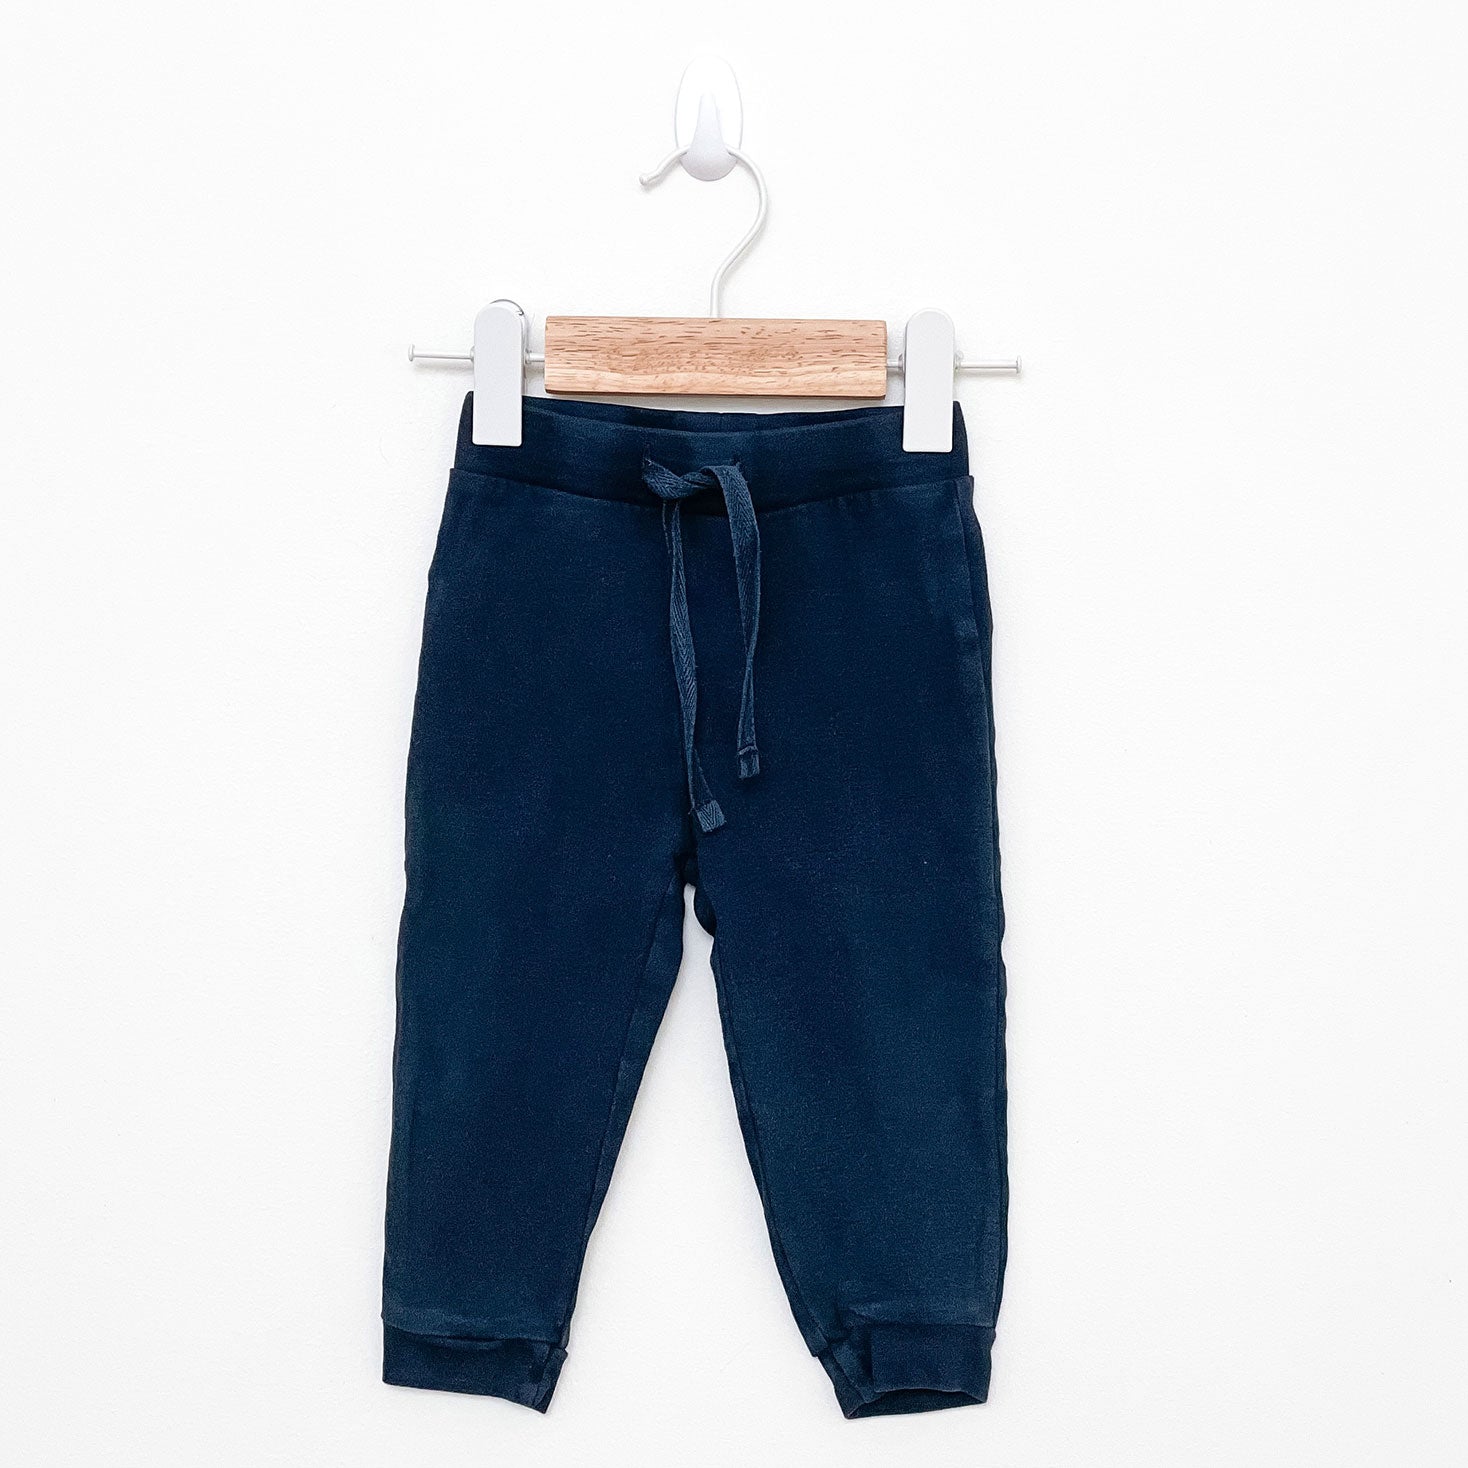 Baby sweatpants (80) – The Rewear Company